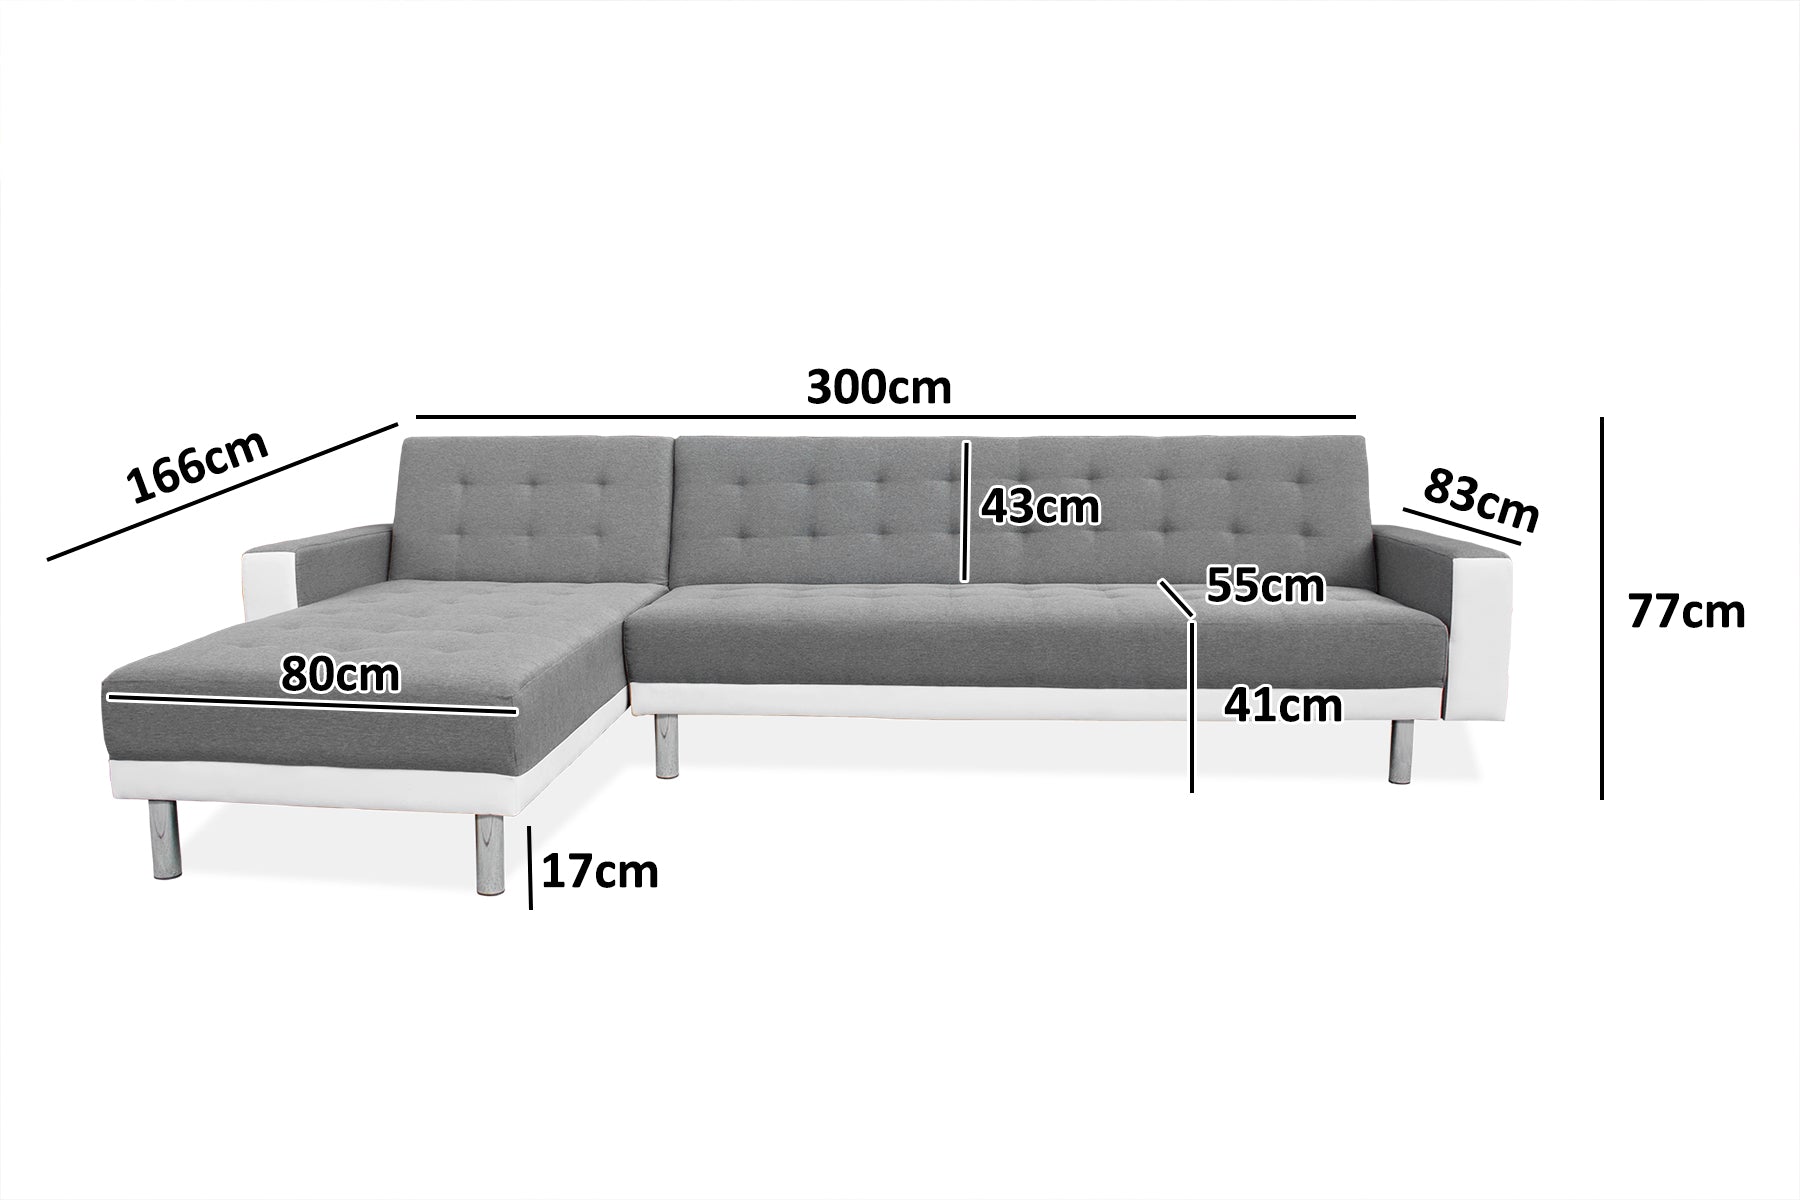 Klika Sofa Bed